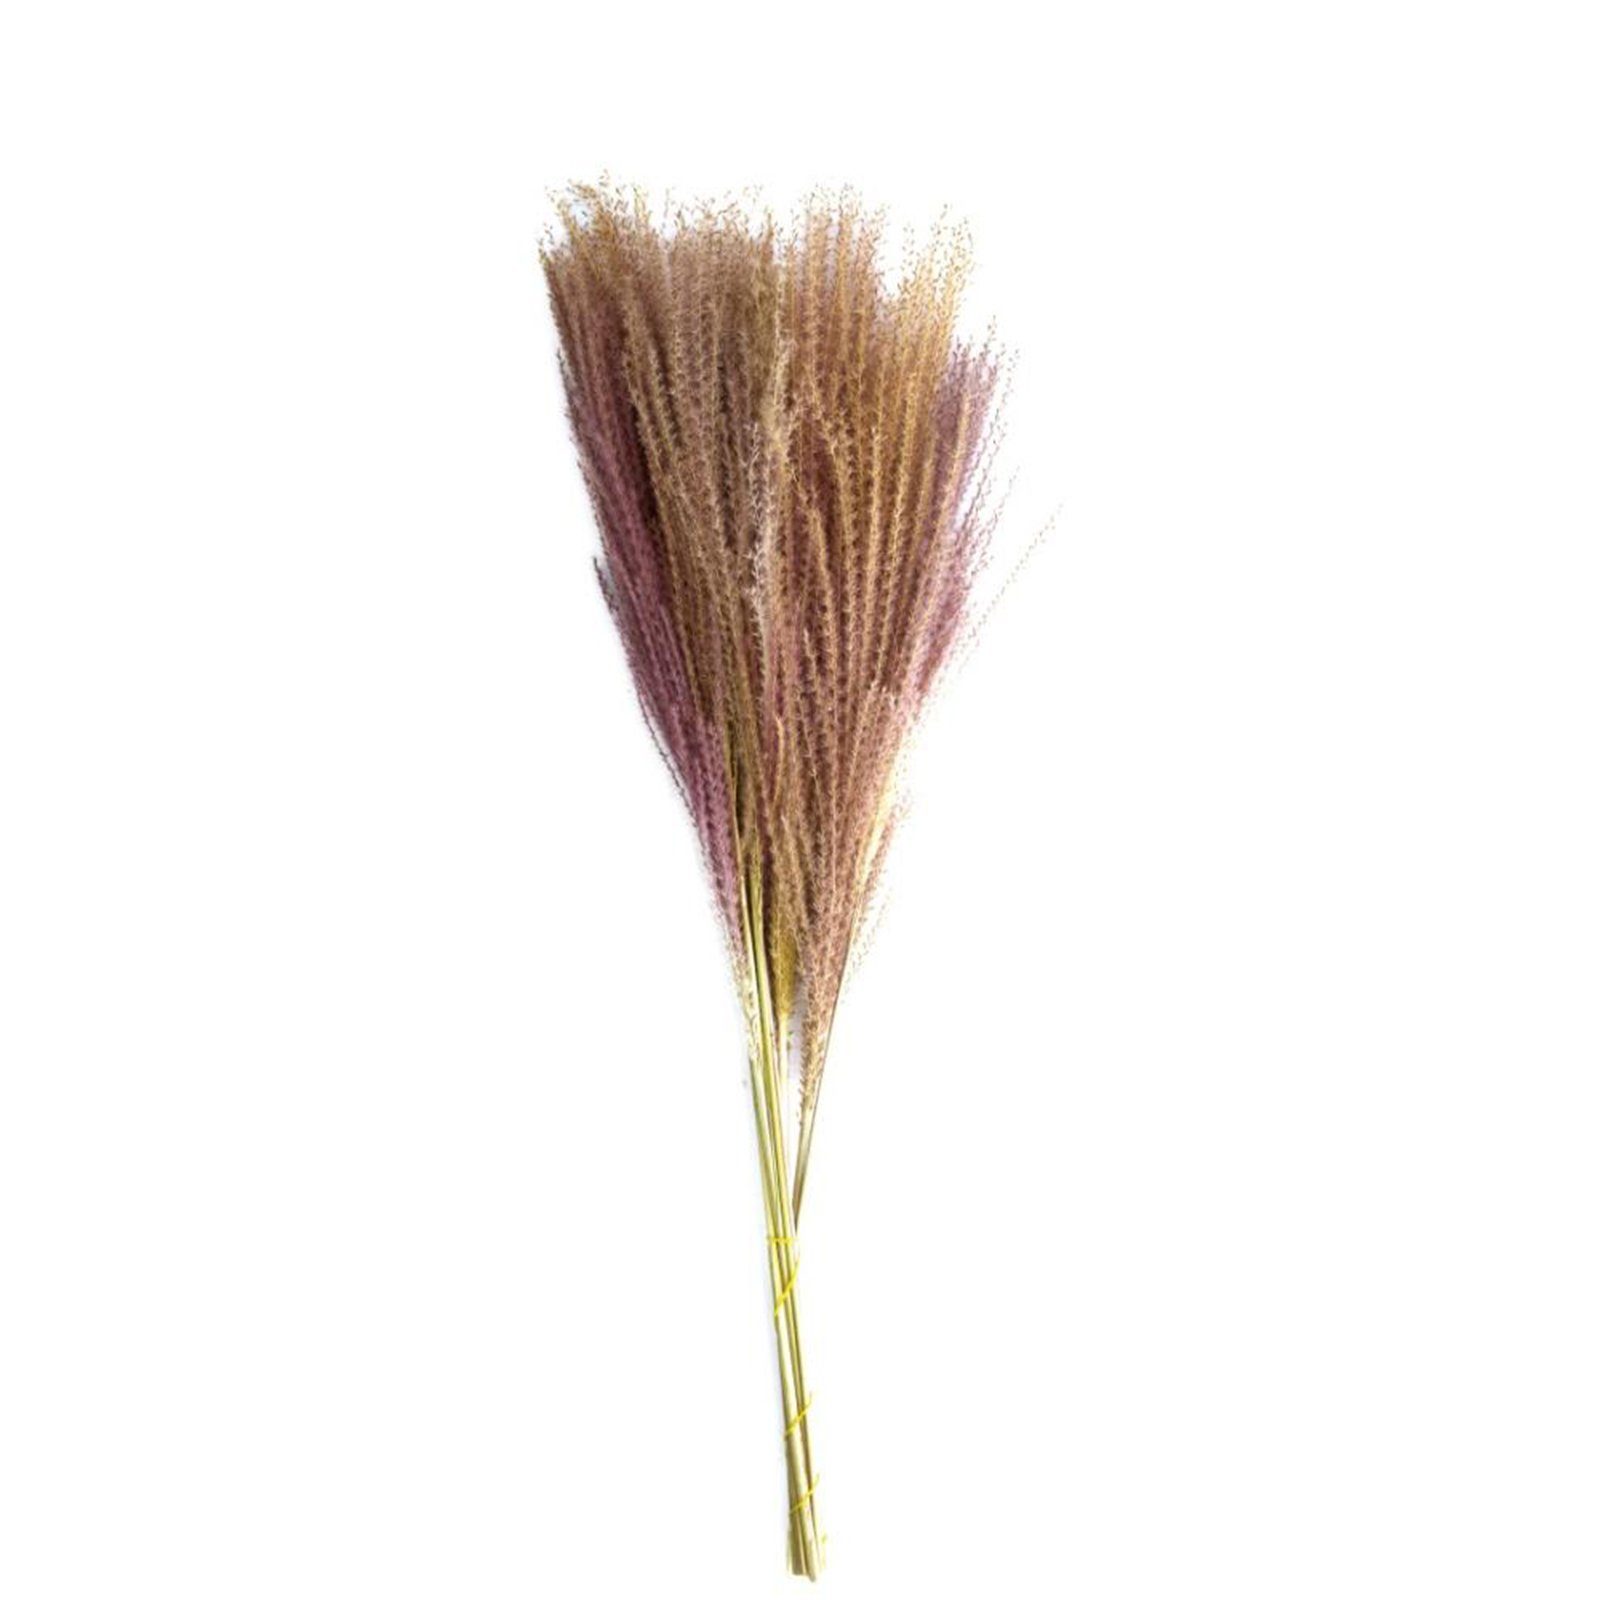 Trockenblume Chinaschilf lila - Miscanthus - 75 cm - 10 Stück, DIJK